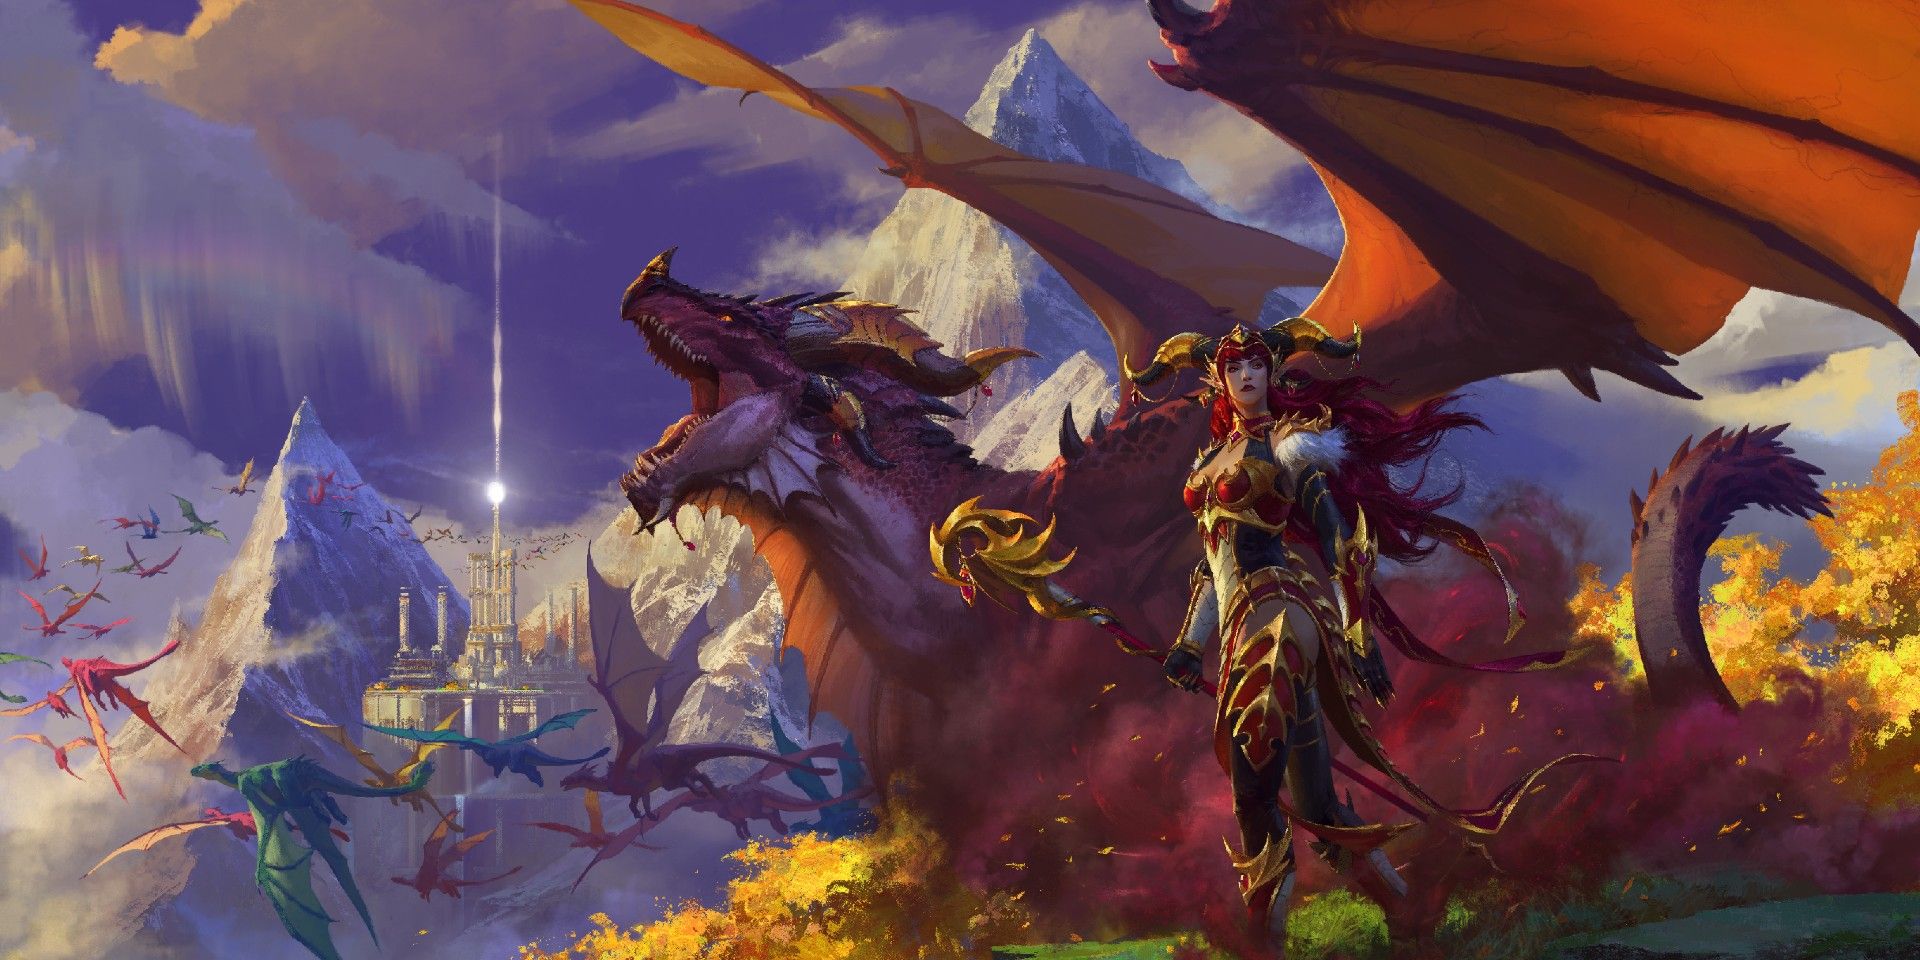 Official artwork for World of Warcraft's Dragonflight expansion.